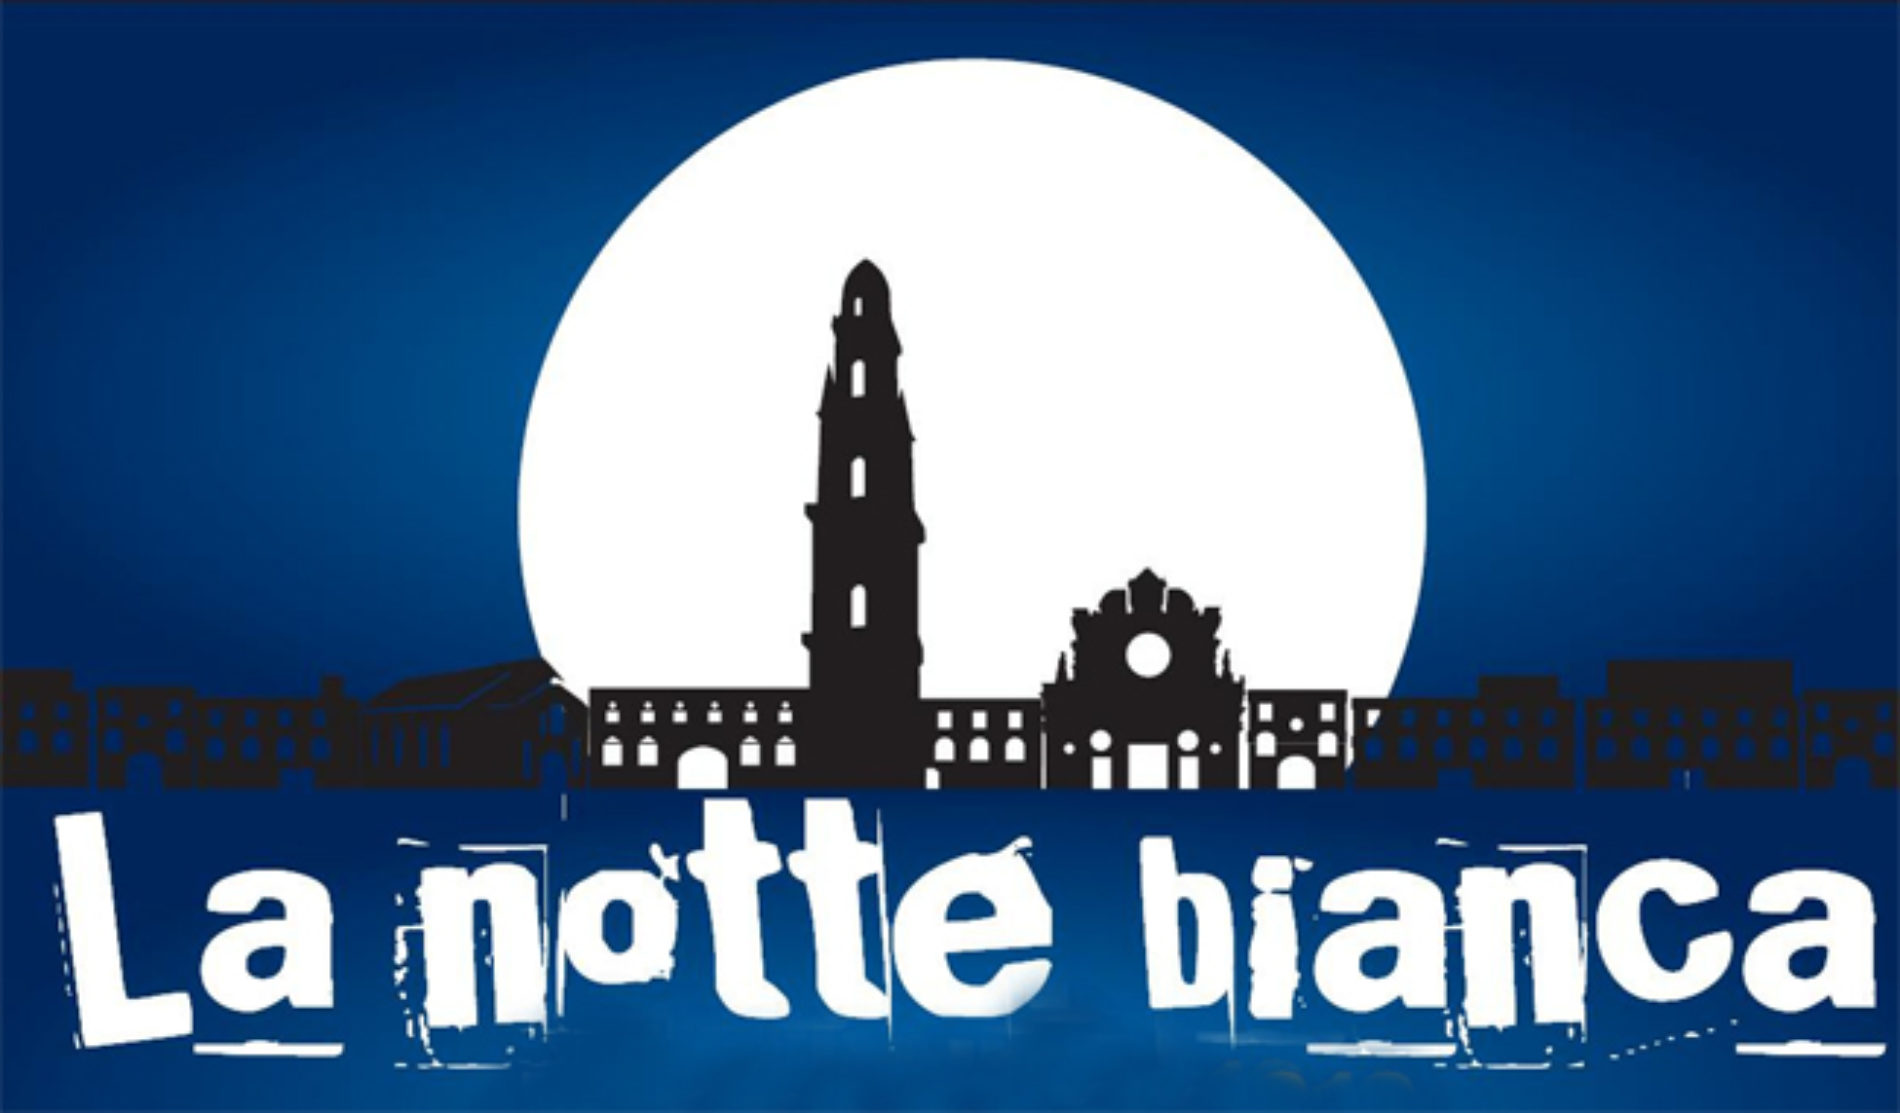 A Barrafranca iniziative culturali, spettacoli e musica per la “Notte Bianca”.